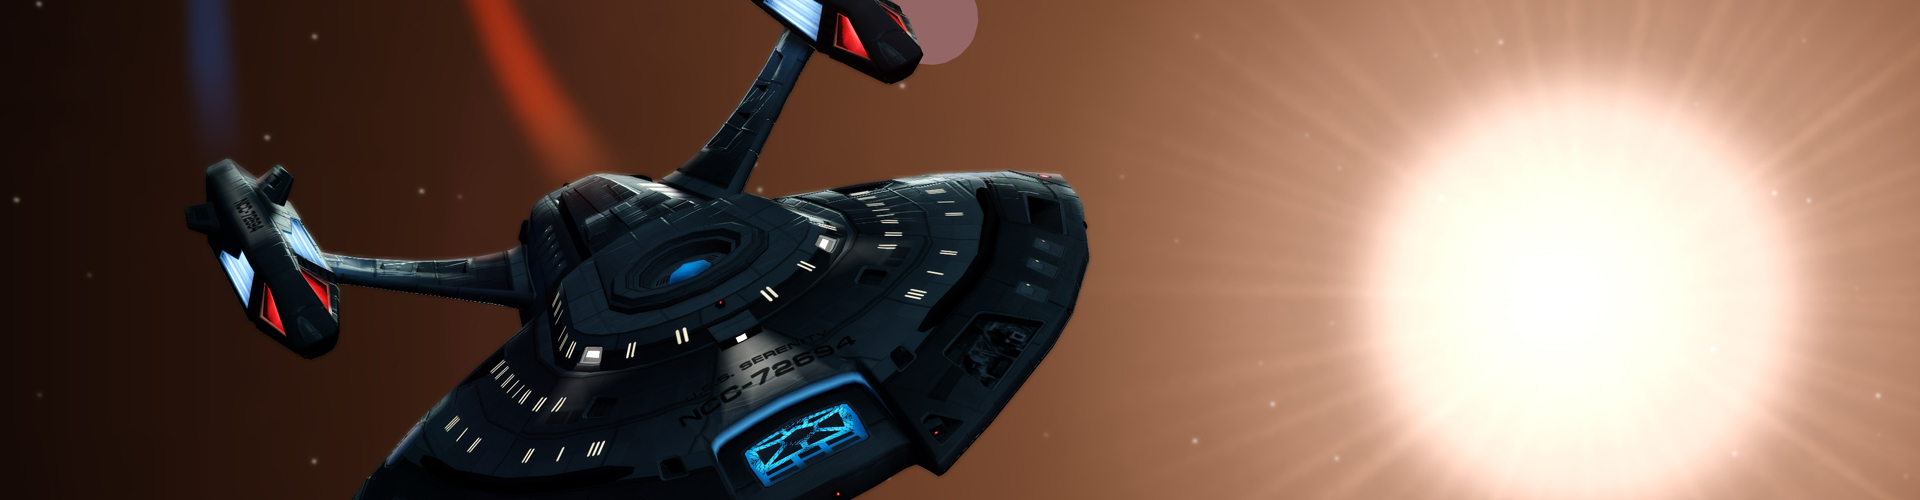 A Nova class starship